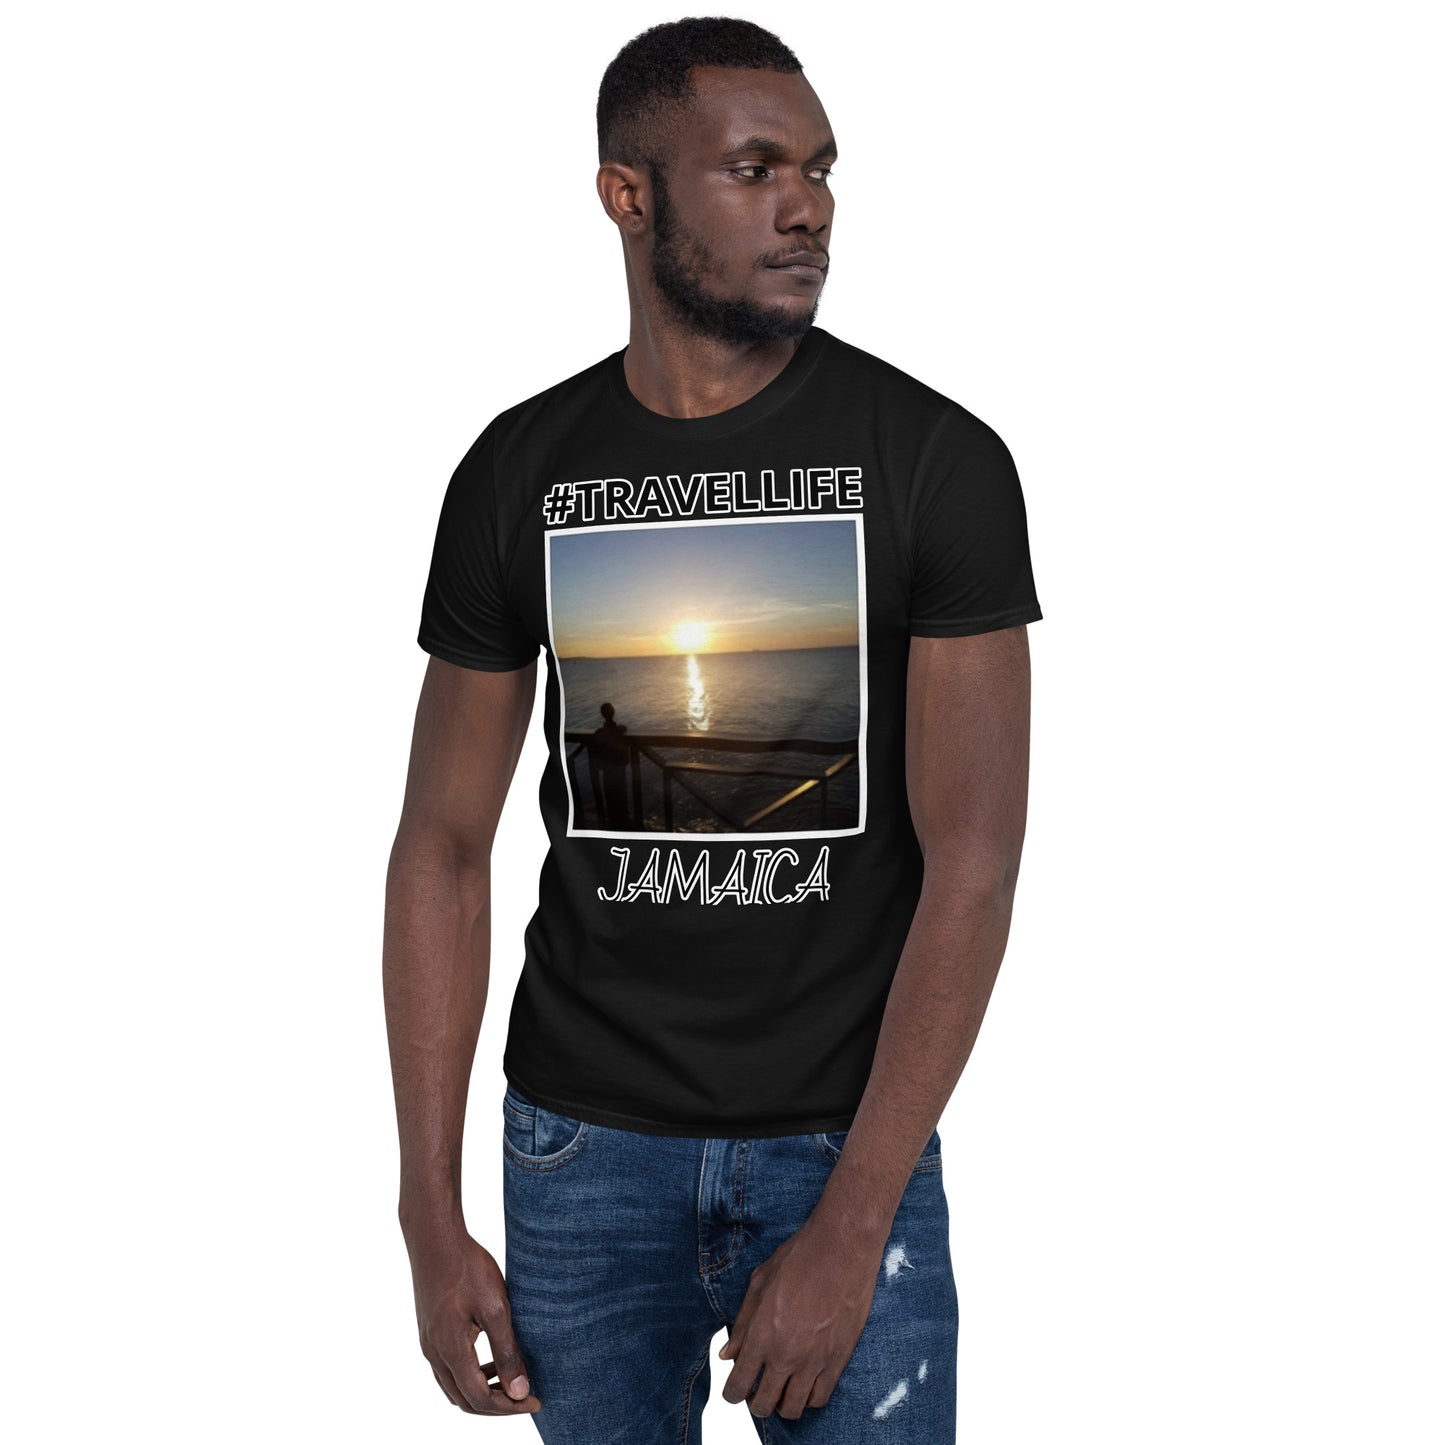 #Travellife Jamaica Sunset Unisex T-Shirt silver text